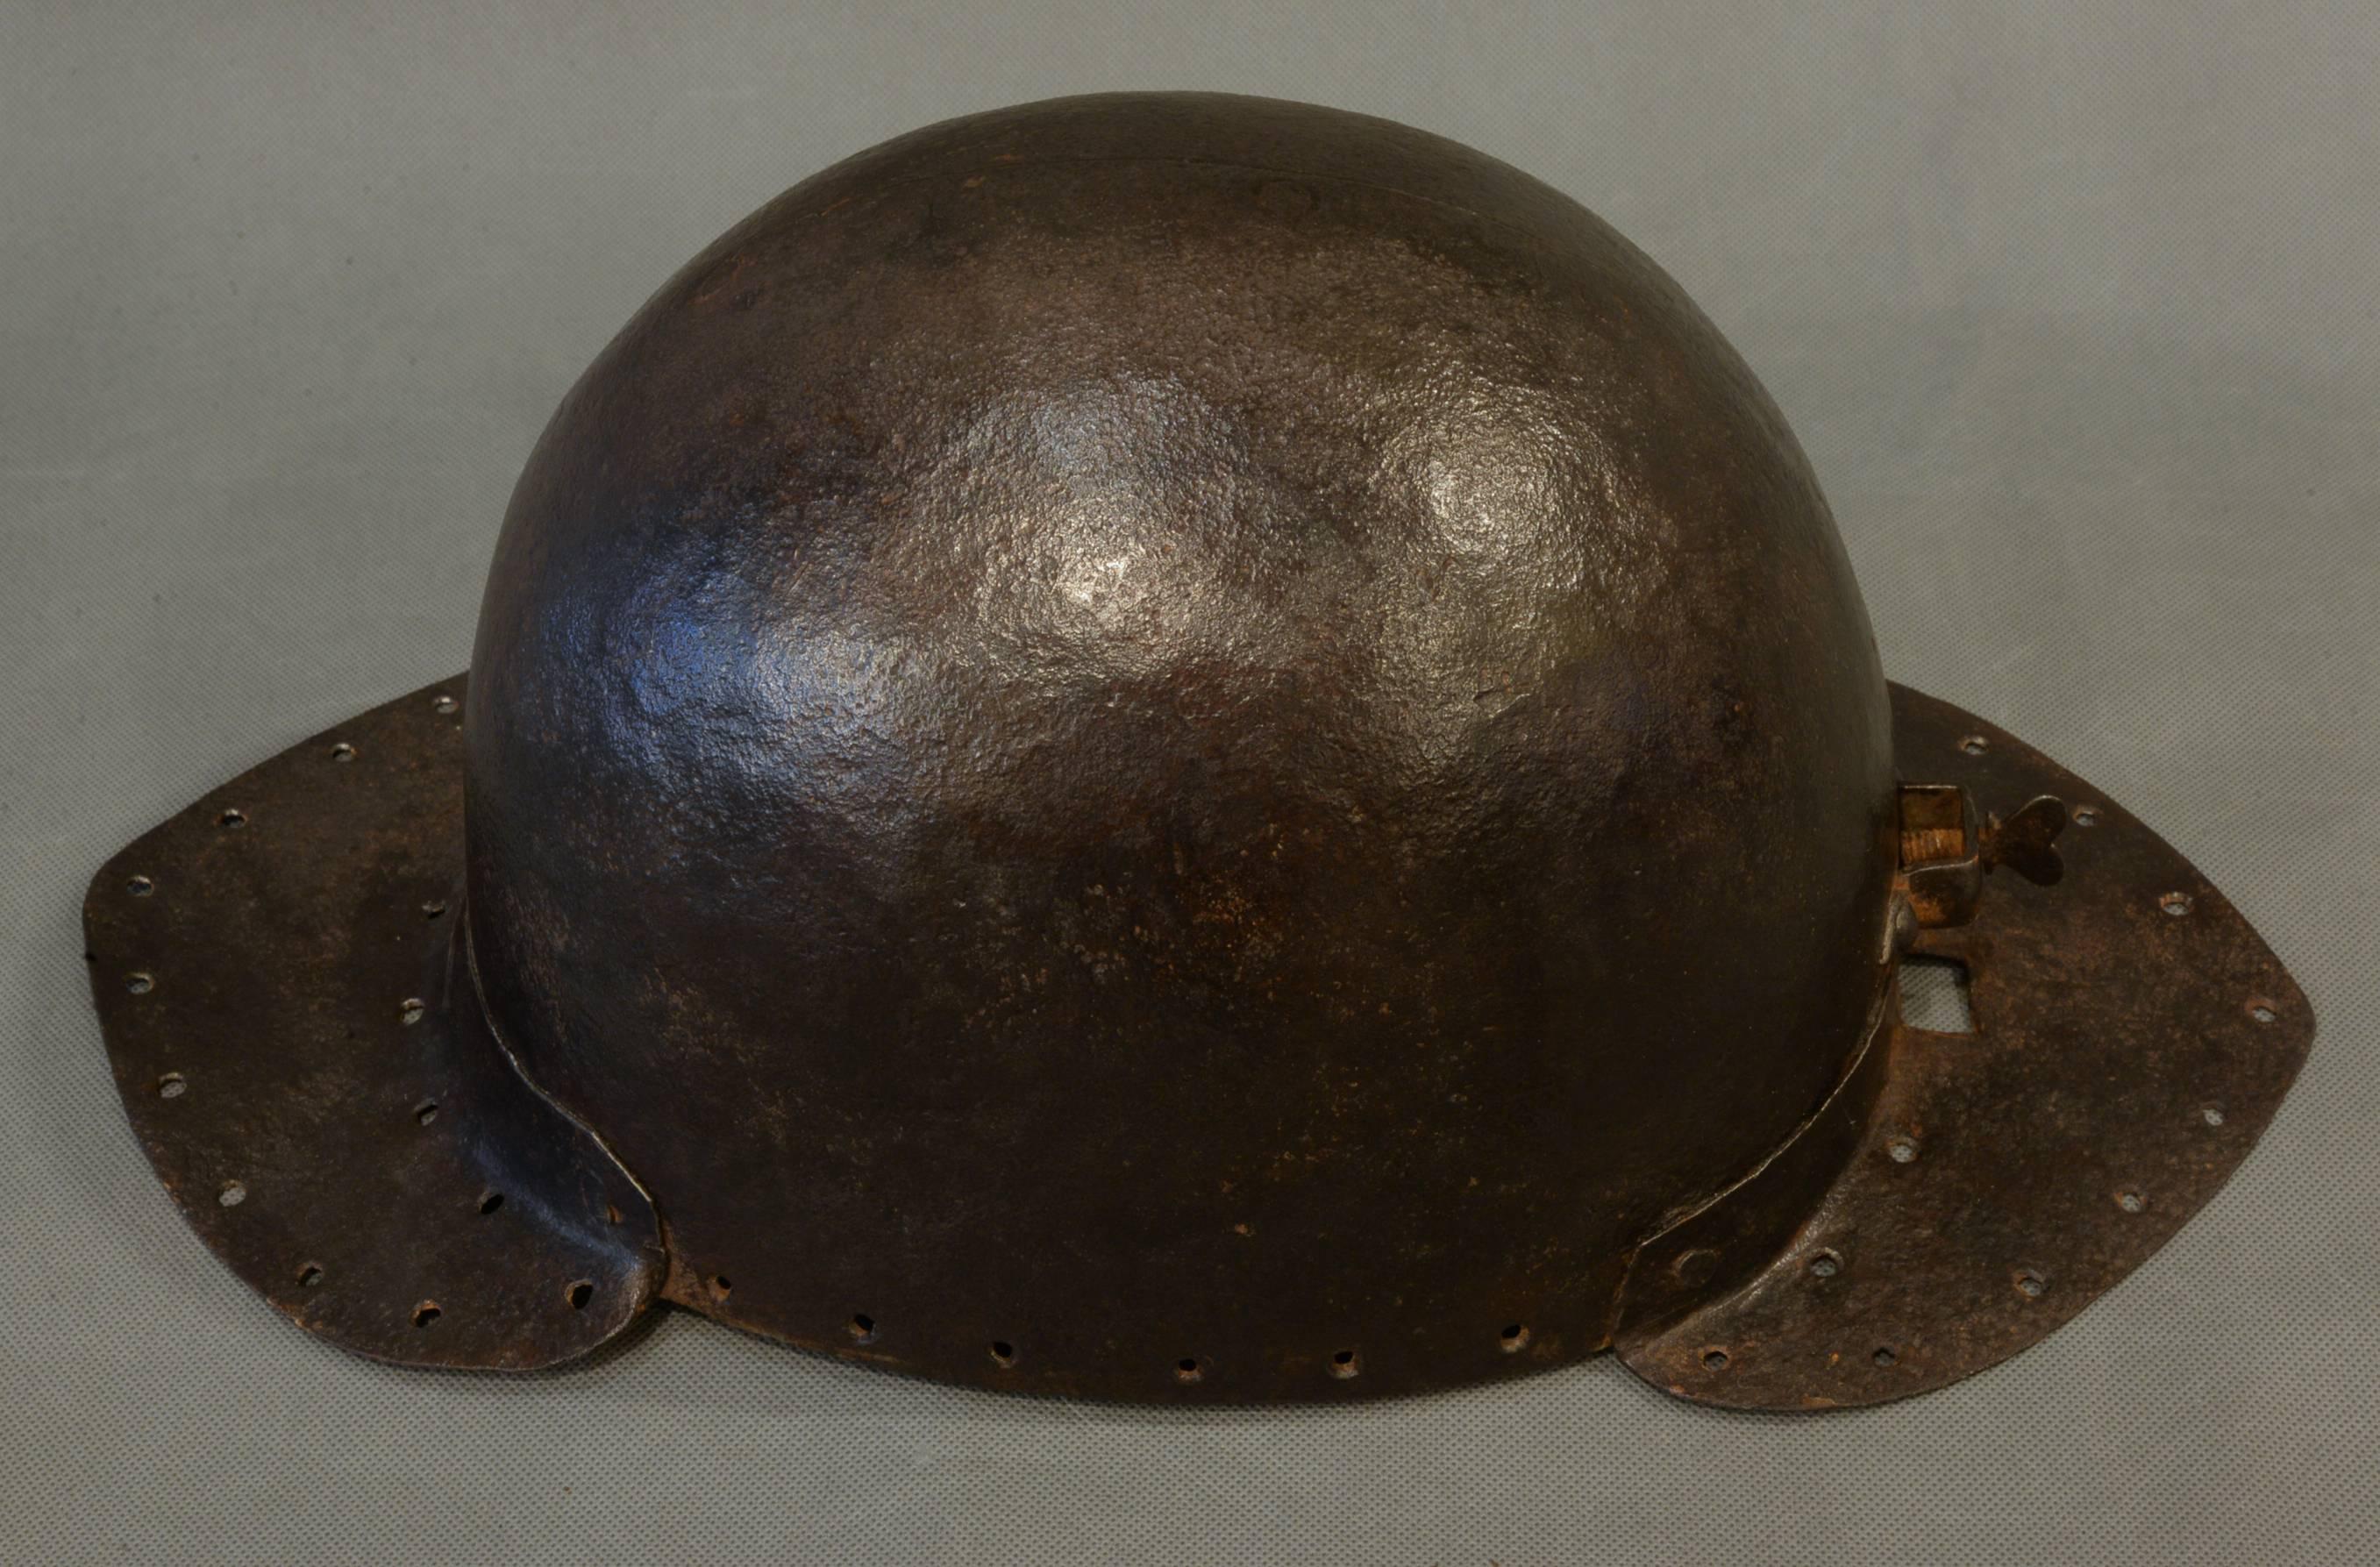 17th century helmets